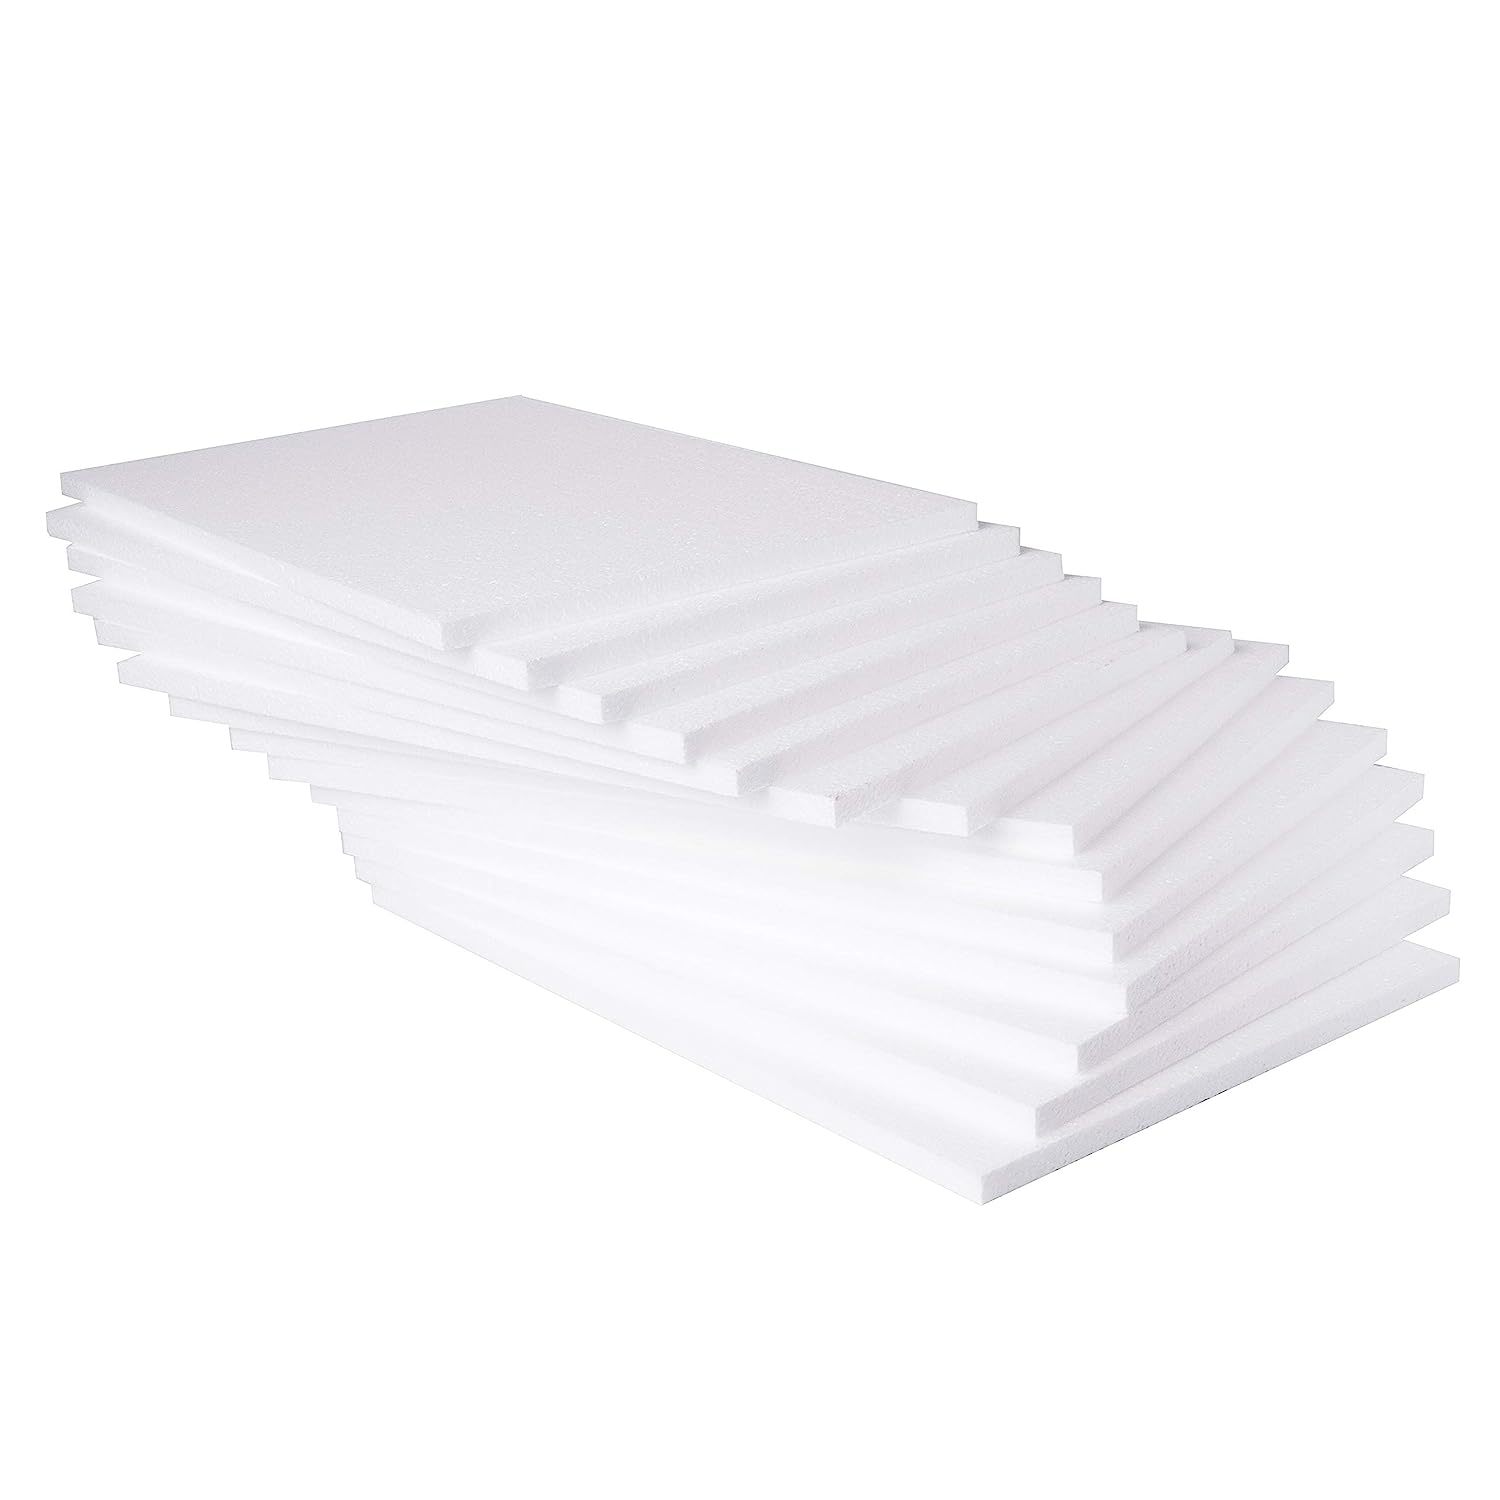 12 Pack Foam Blocks For Crafts, Polystyrene Brick Rectangles For